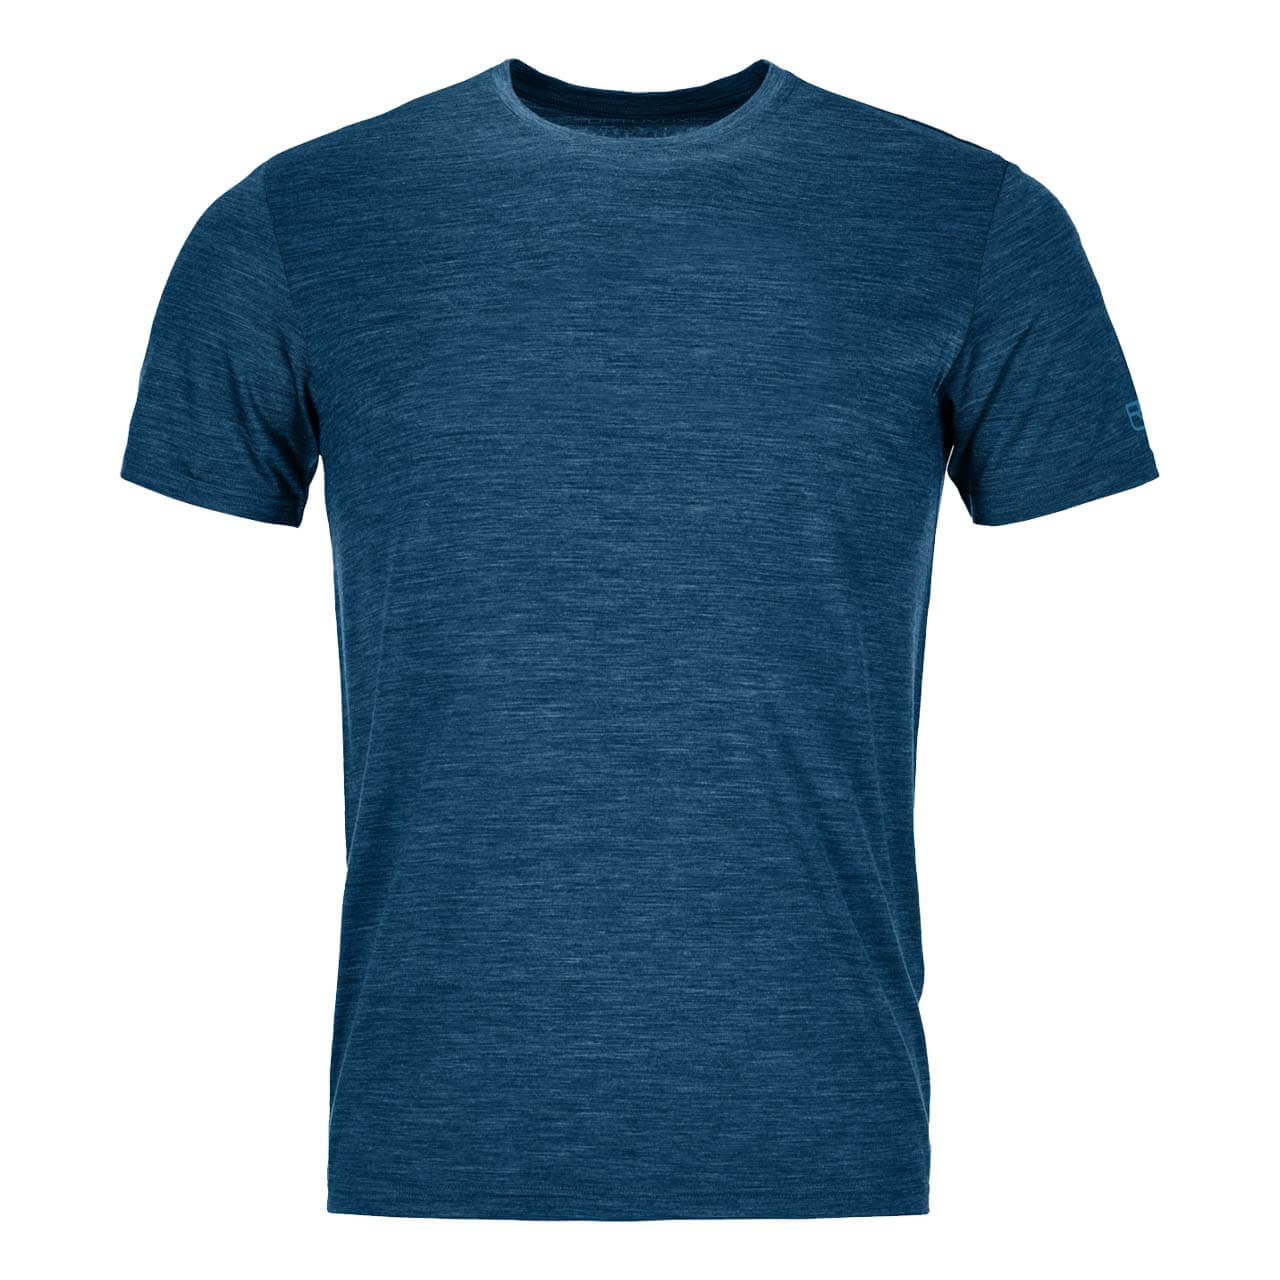 Ortovox Merino T-Shirt 150 Cool Clean - Petrol Blue Blend, L